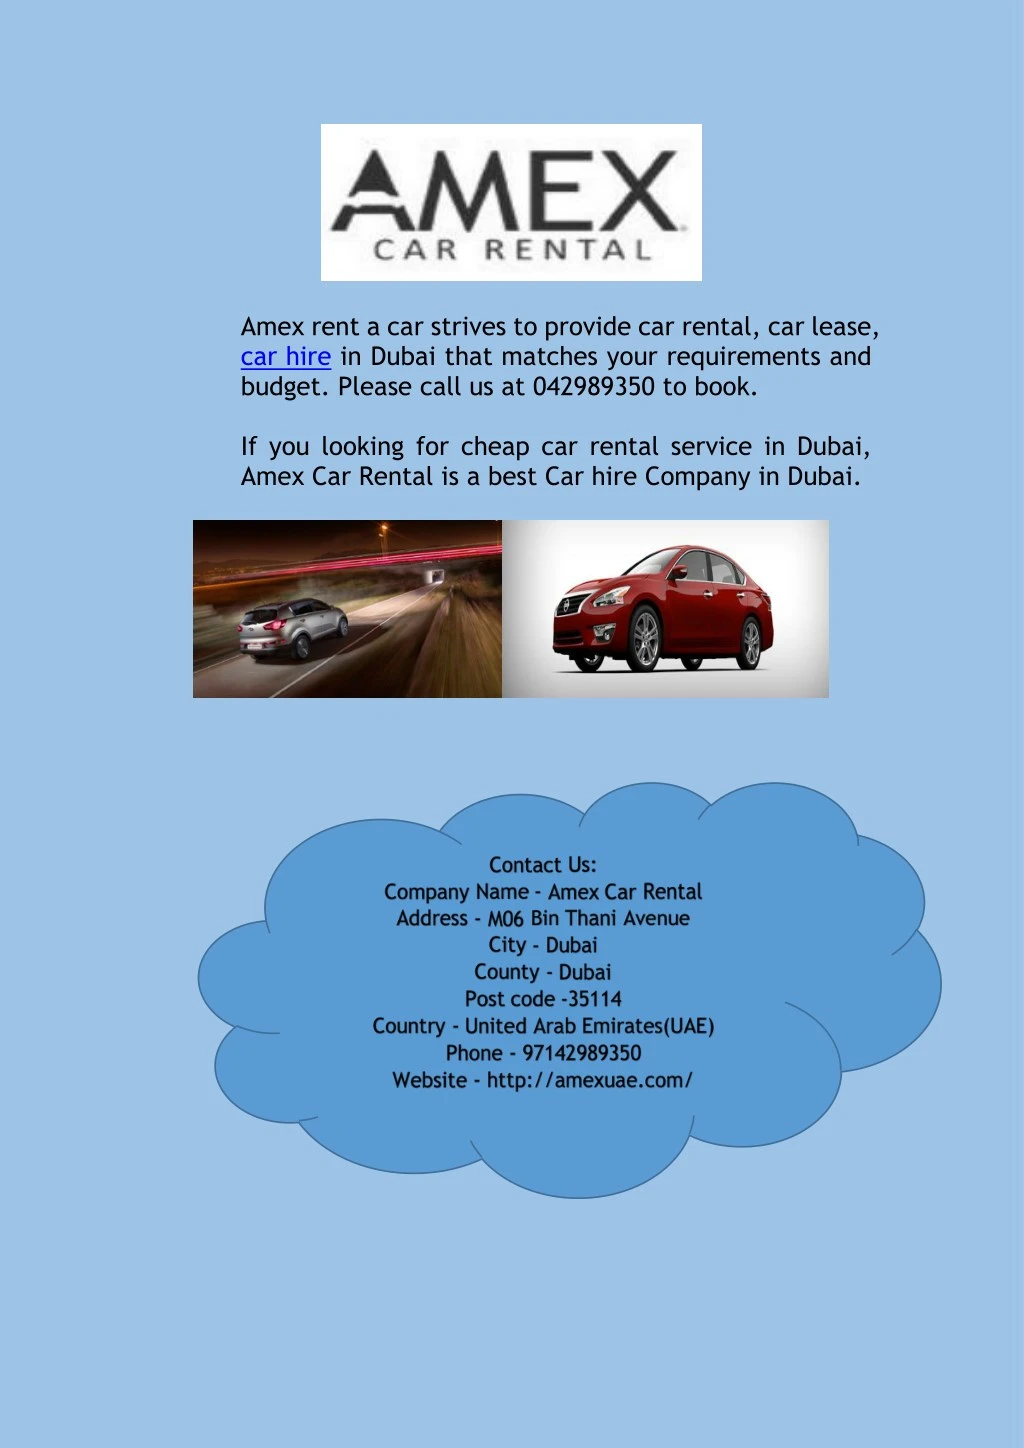 amex rent a car strives to provide car rental